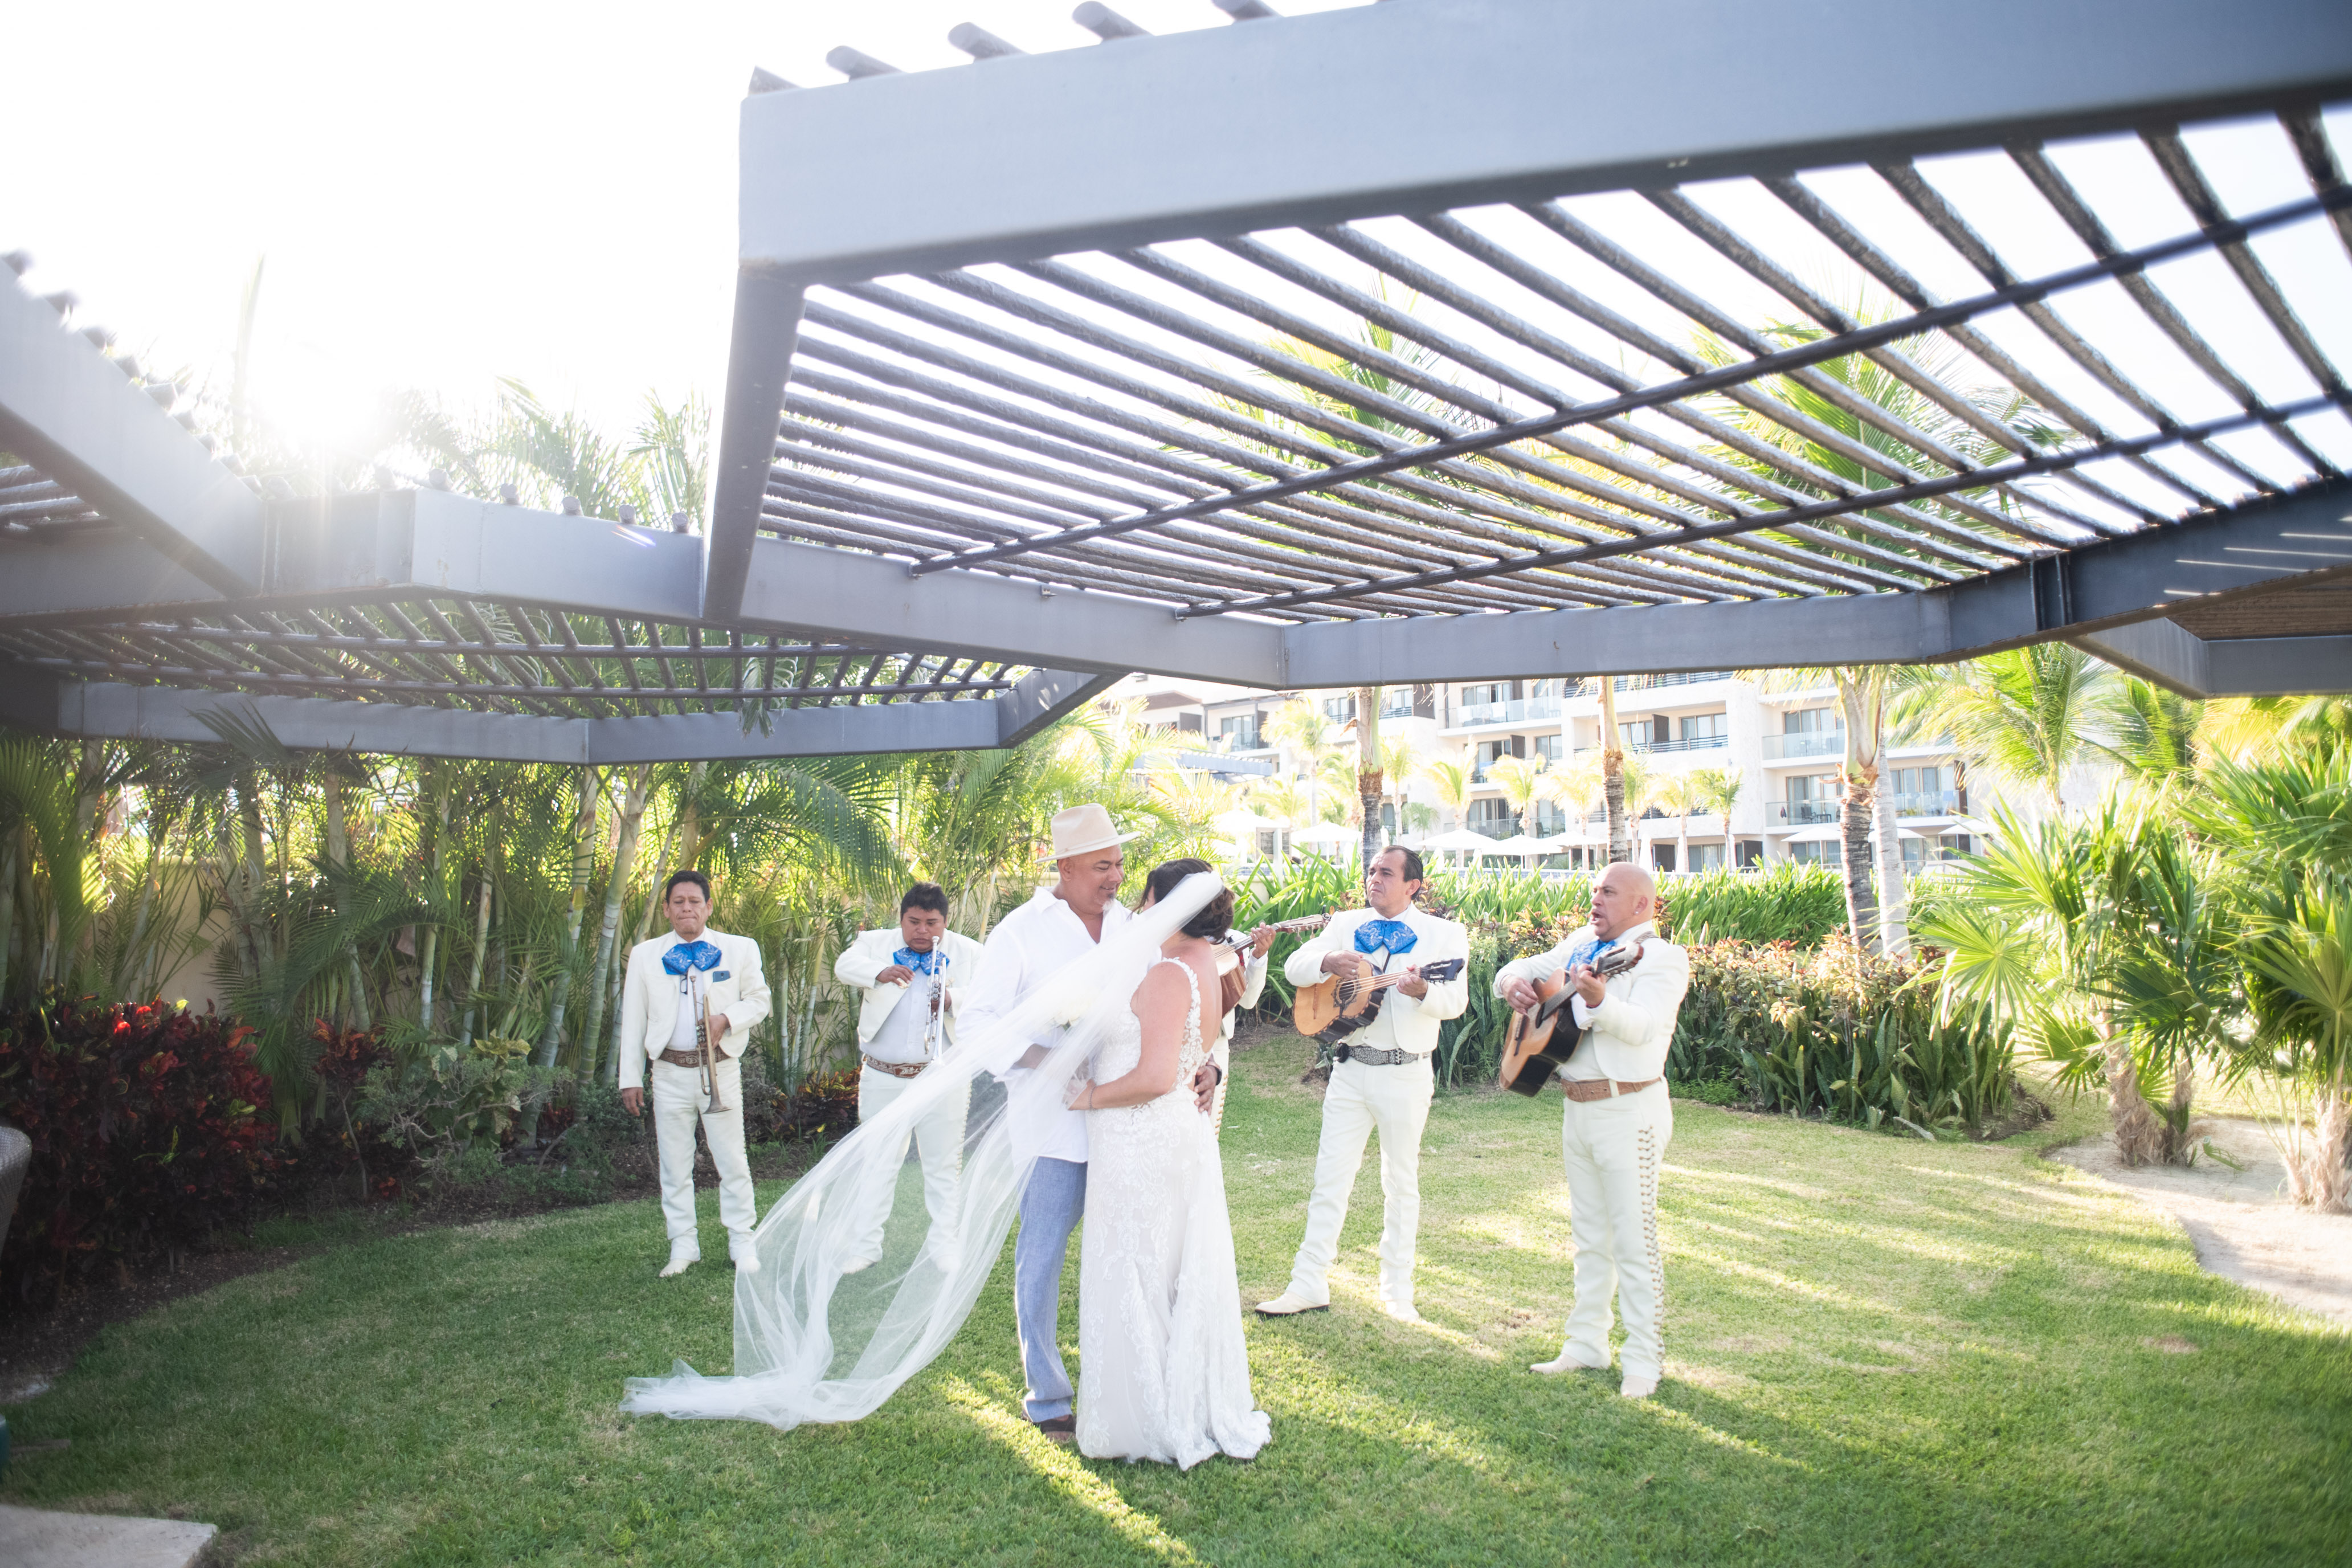 Royalton Riviera Cancun wedding, Royalton Riviera Cancun Hideaway, Cancun wedding, destination mexico wedding, destination luxury mexico wedding, destination wedding photographer, luxury destination wedding photographer